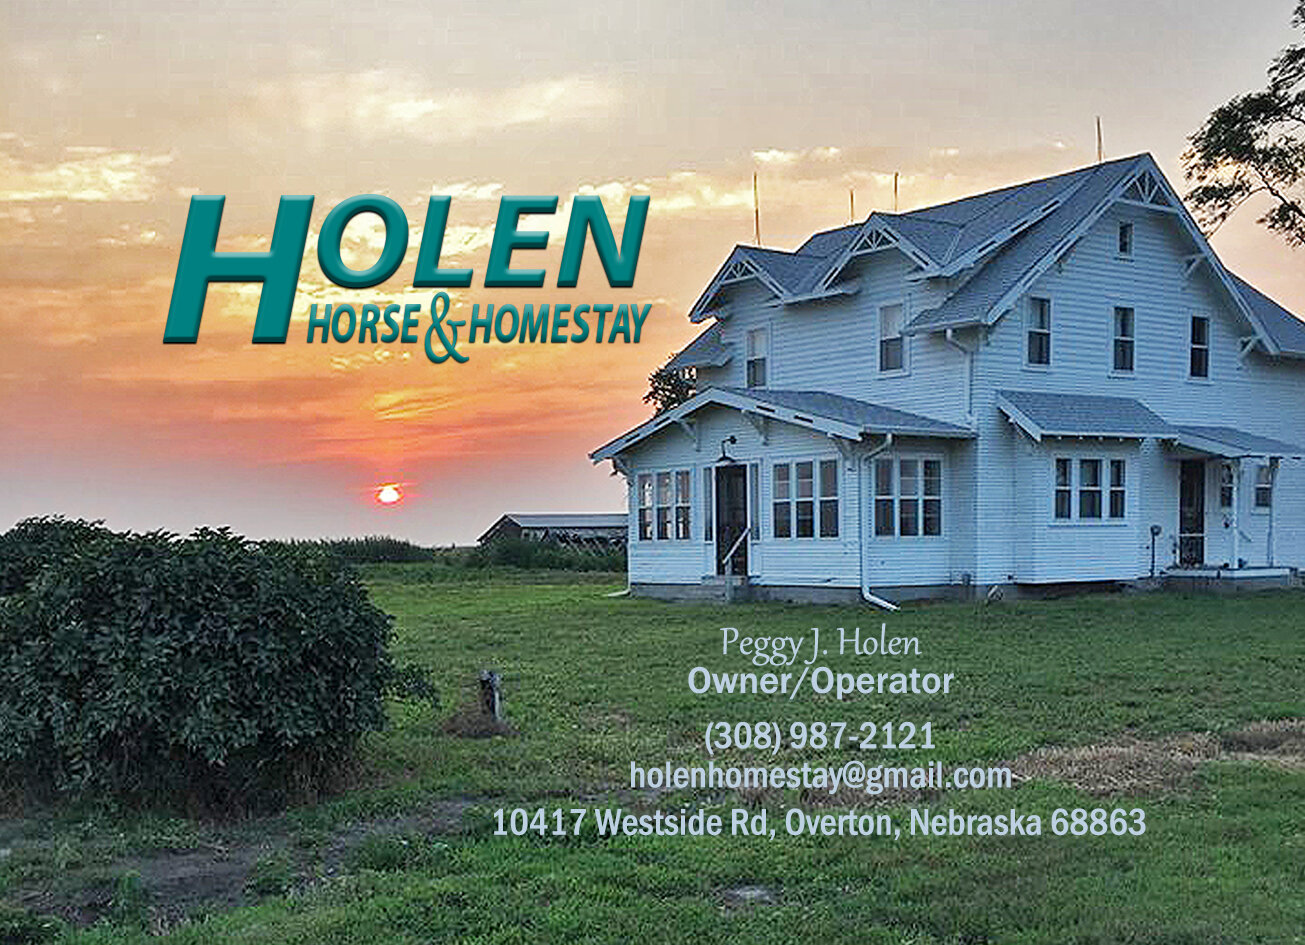 Holen Horse & Homestay Postcard (Front)